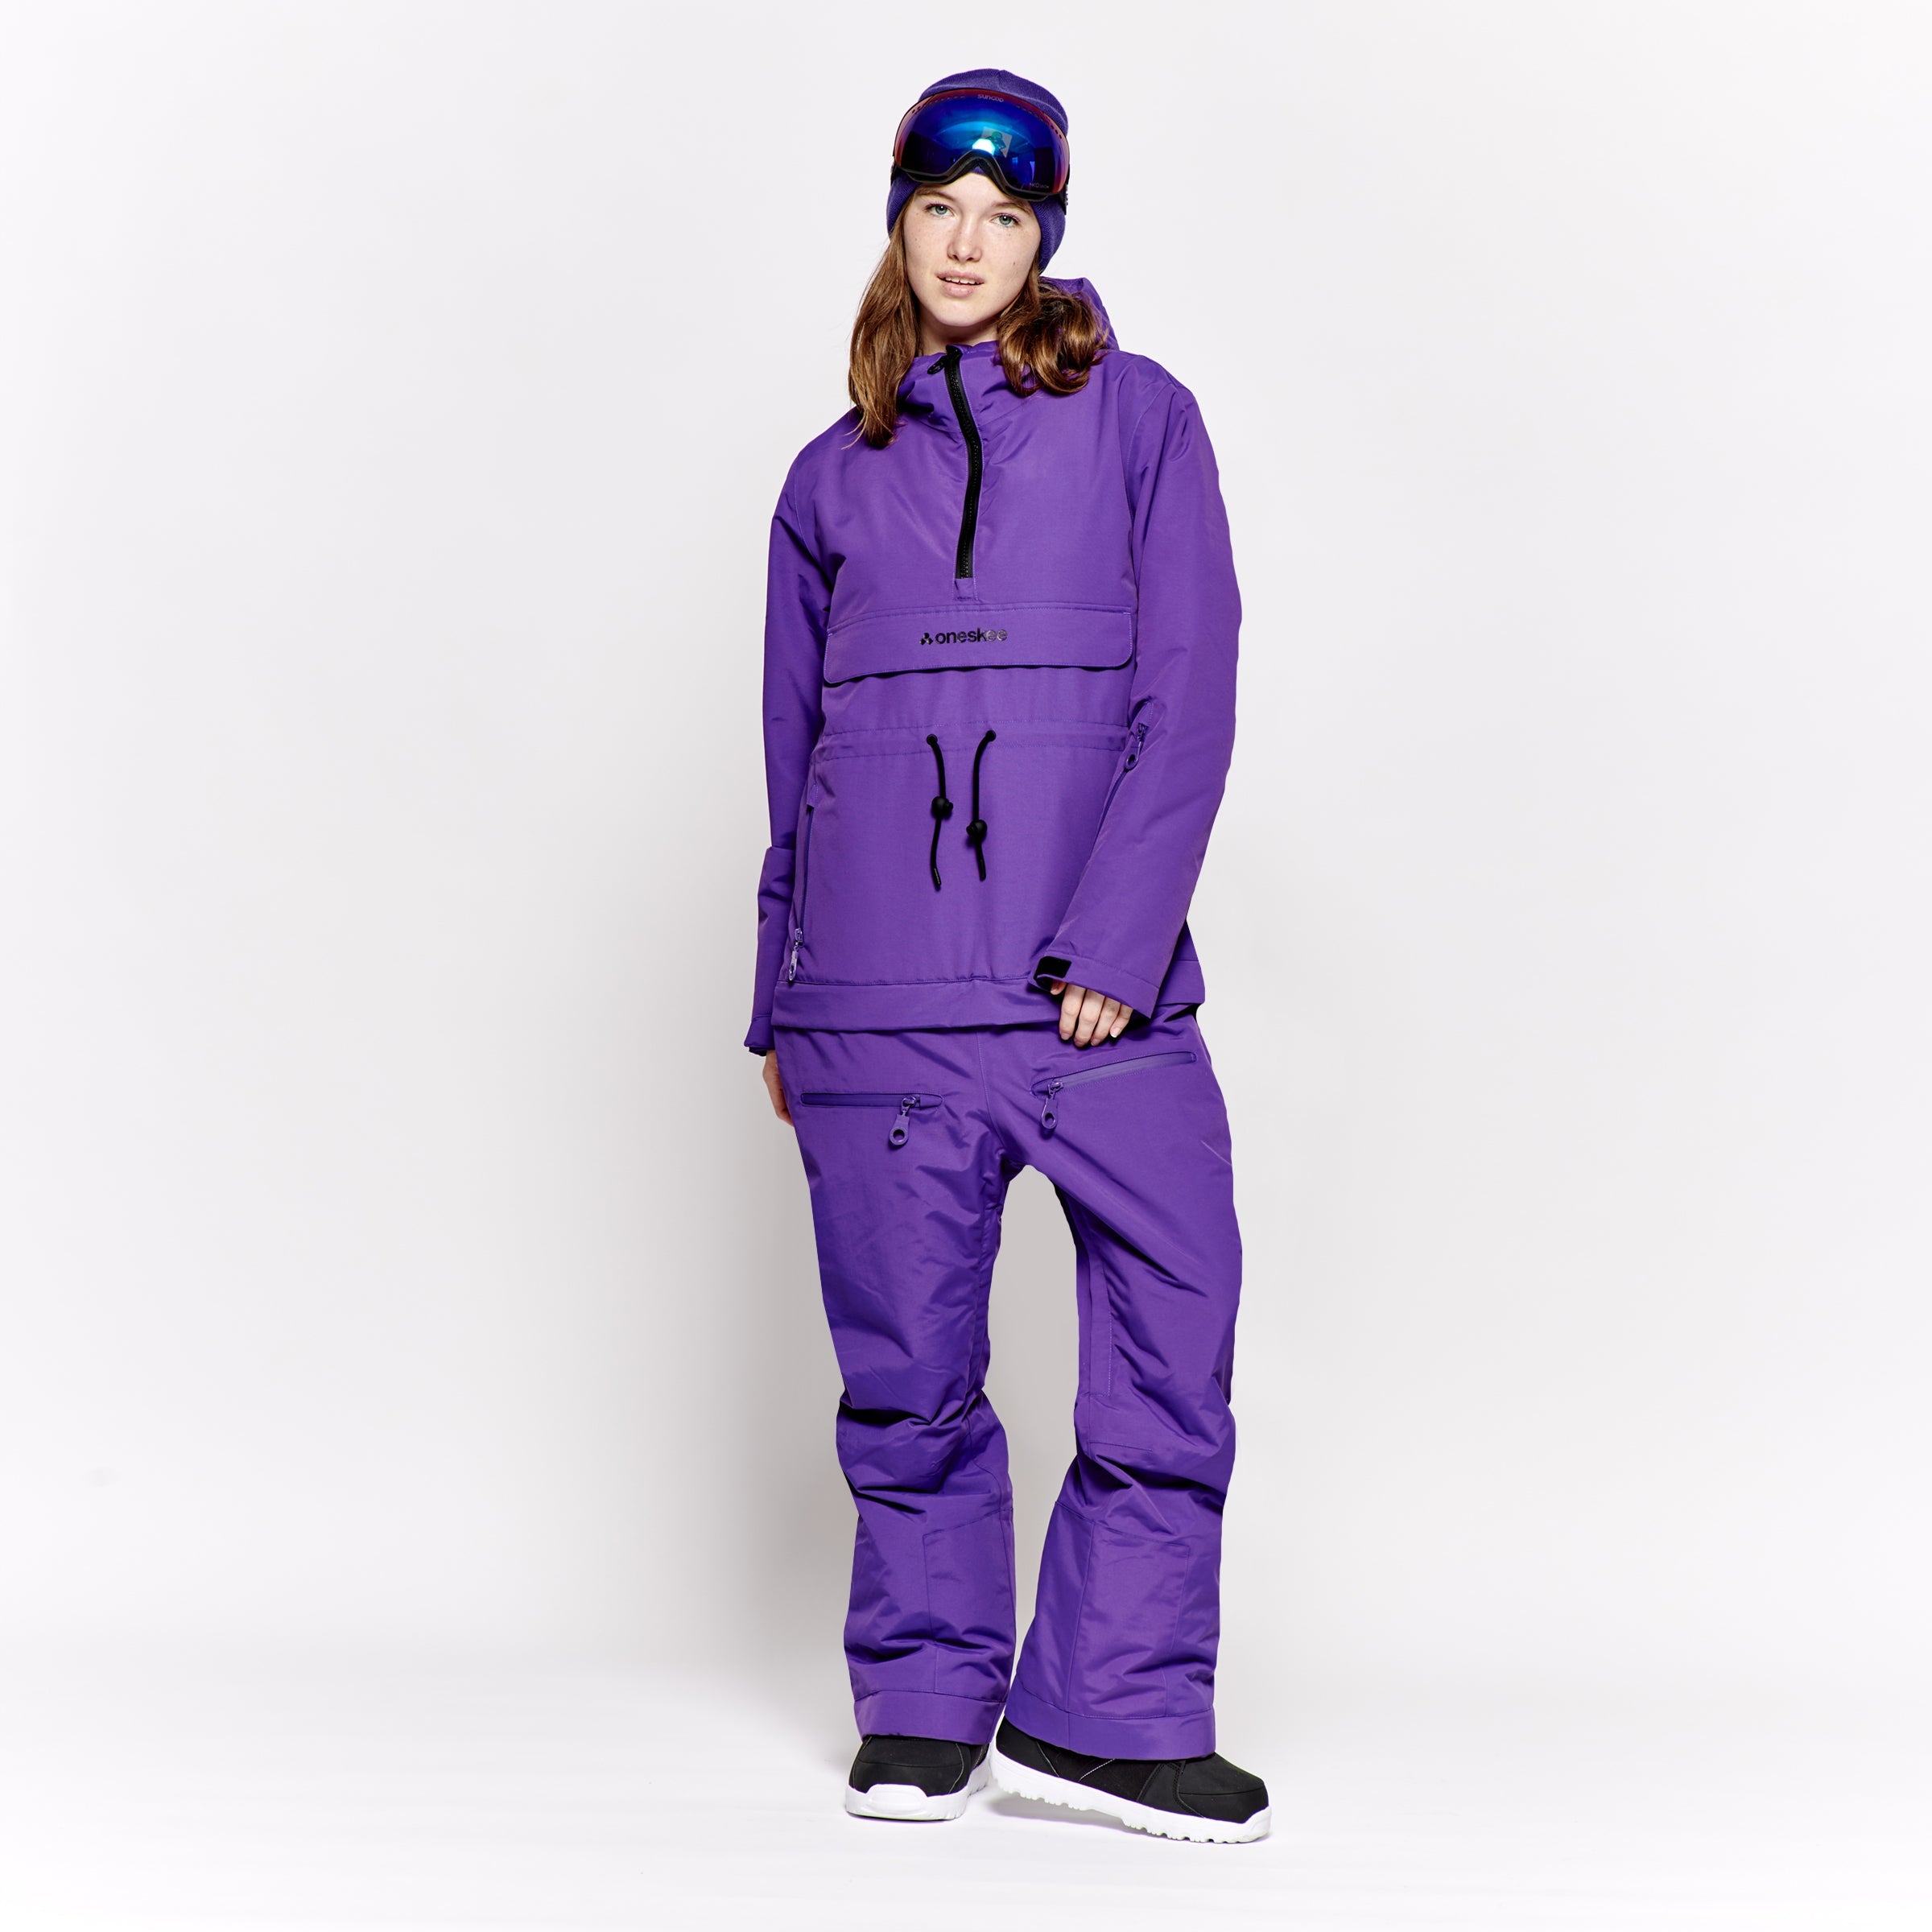 OUTLET ROPA DE ESQUÍ Tsunami 91201 - Chaqueta de esquí mujer white/purple -  Private Sport Shop